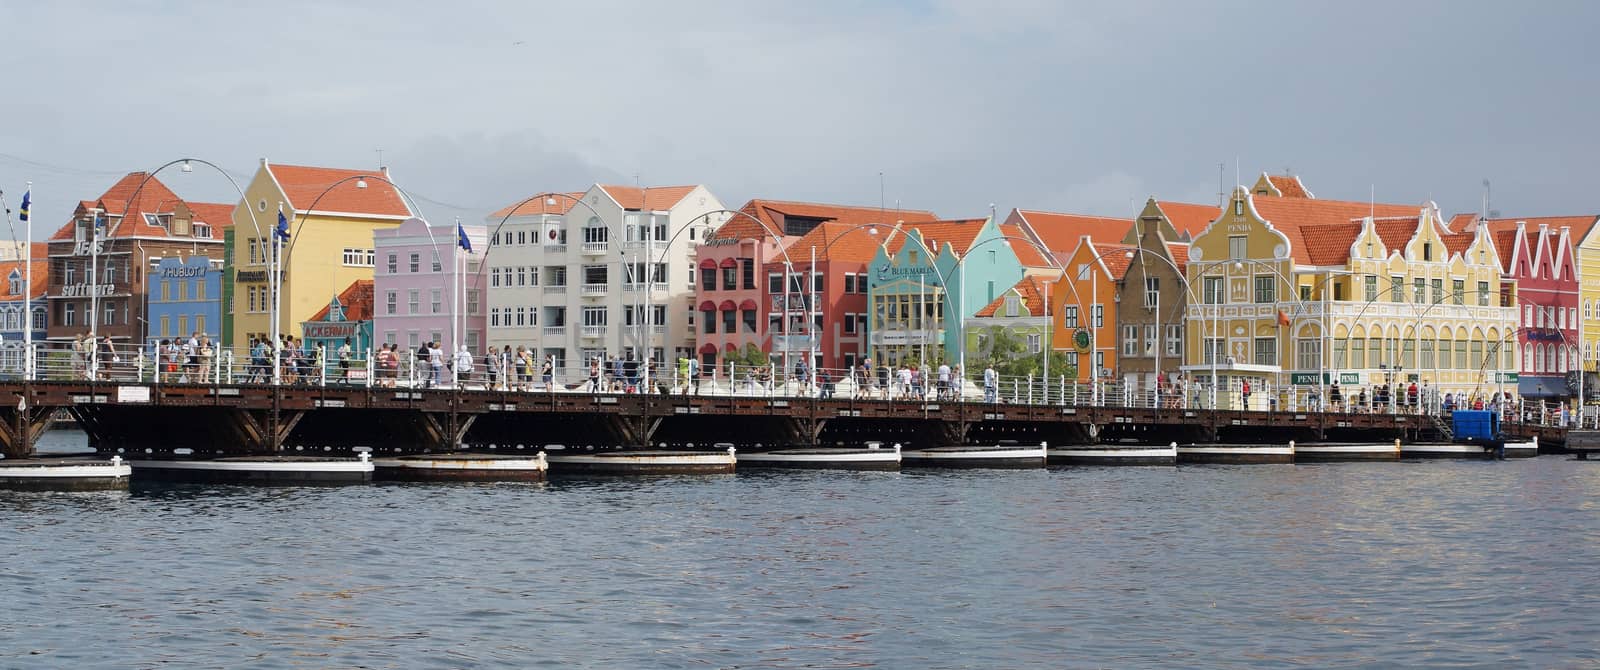 Willemstad, Curacao, ABC Islands by alfotokunst